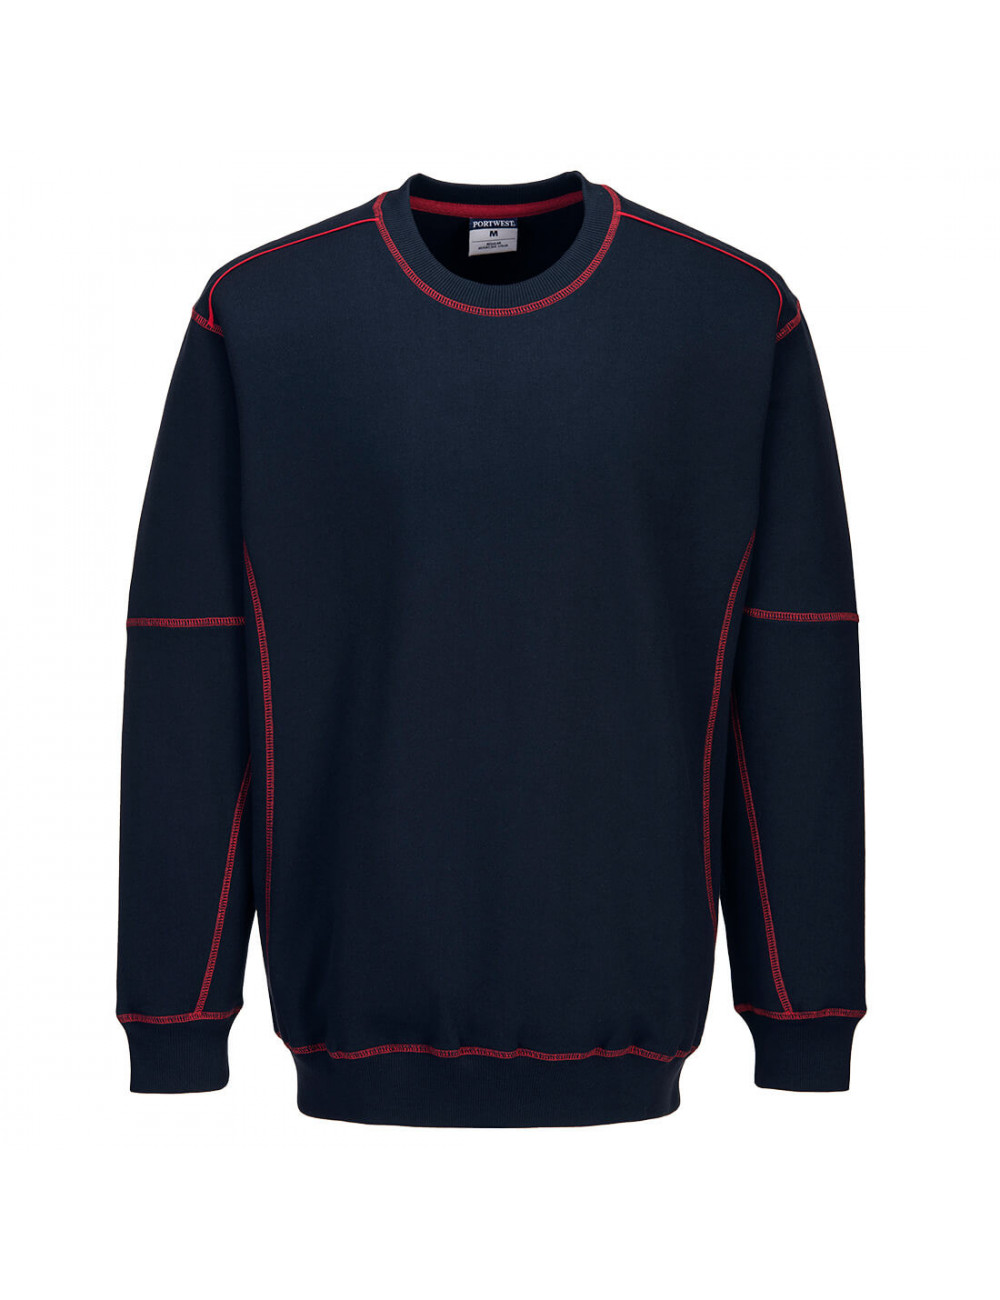 Zweifarbiges Portwest-Sweatshirt in Marineblau/Rot